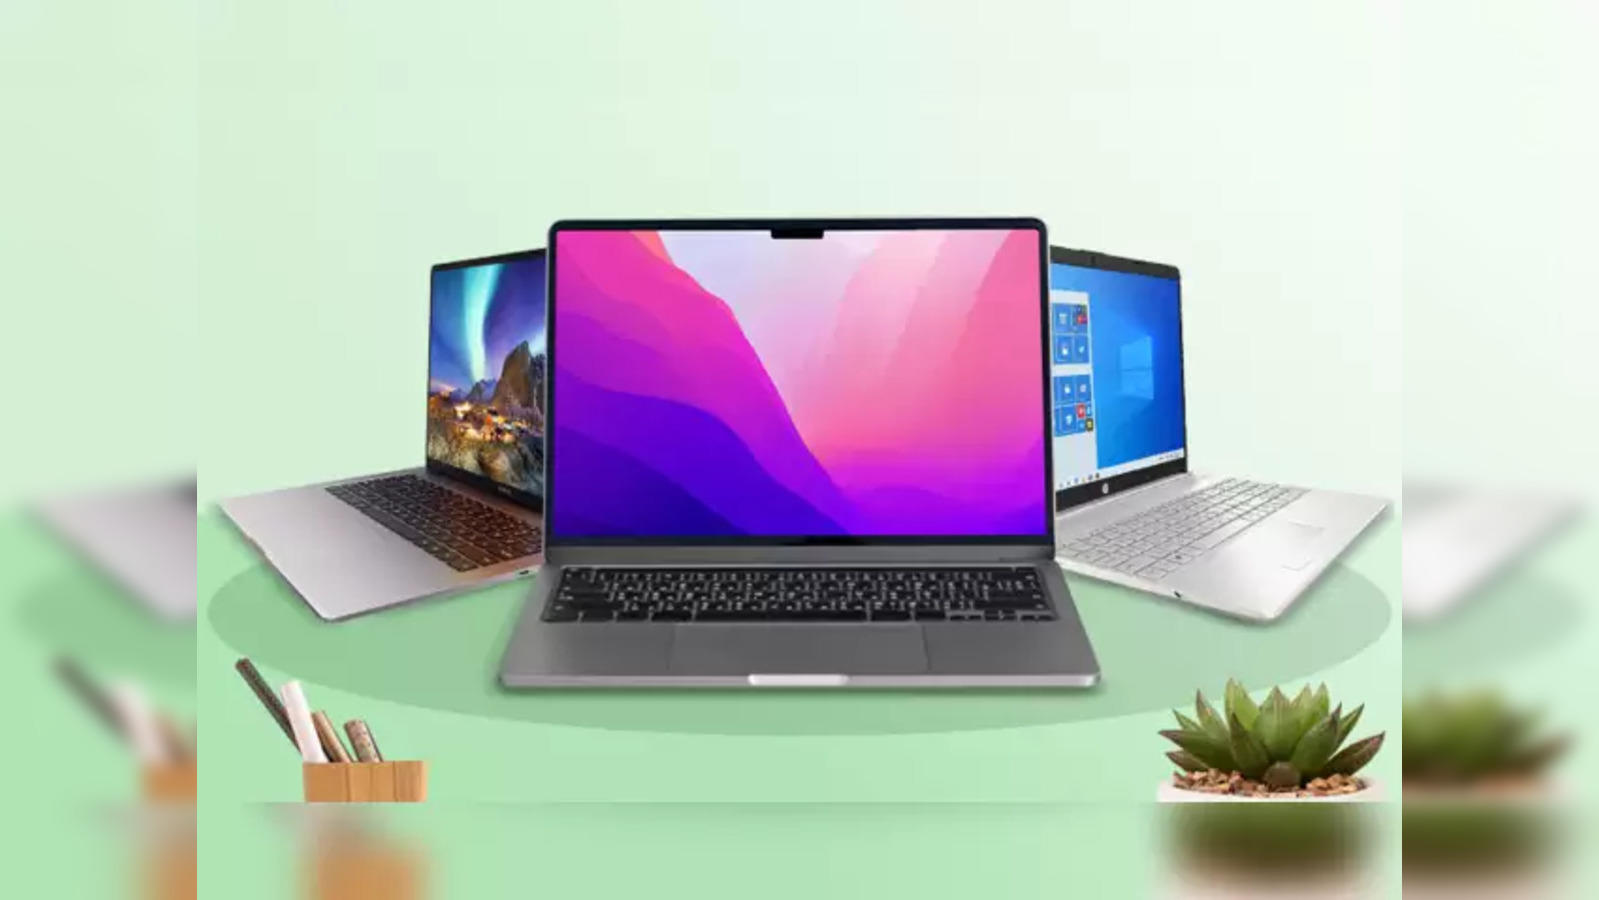 Open Box Computers & Electronics: Laptops, Desktops, Tablets